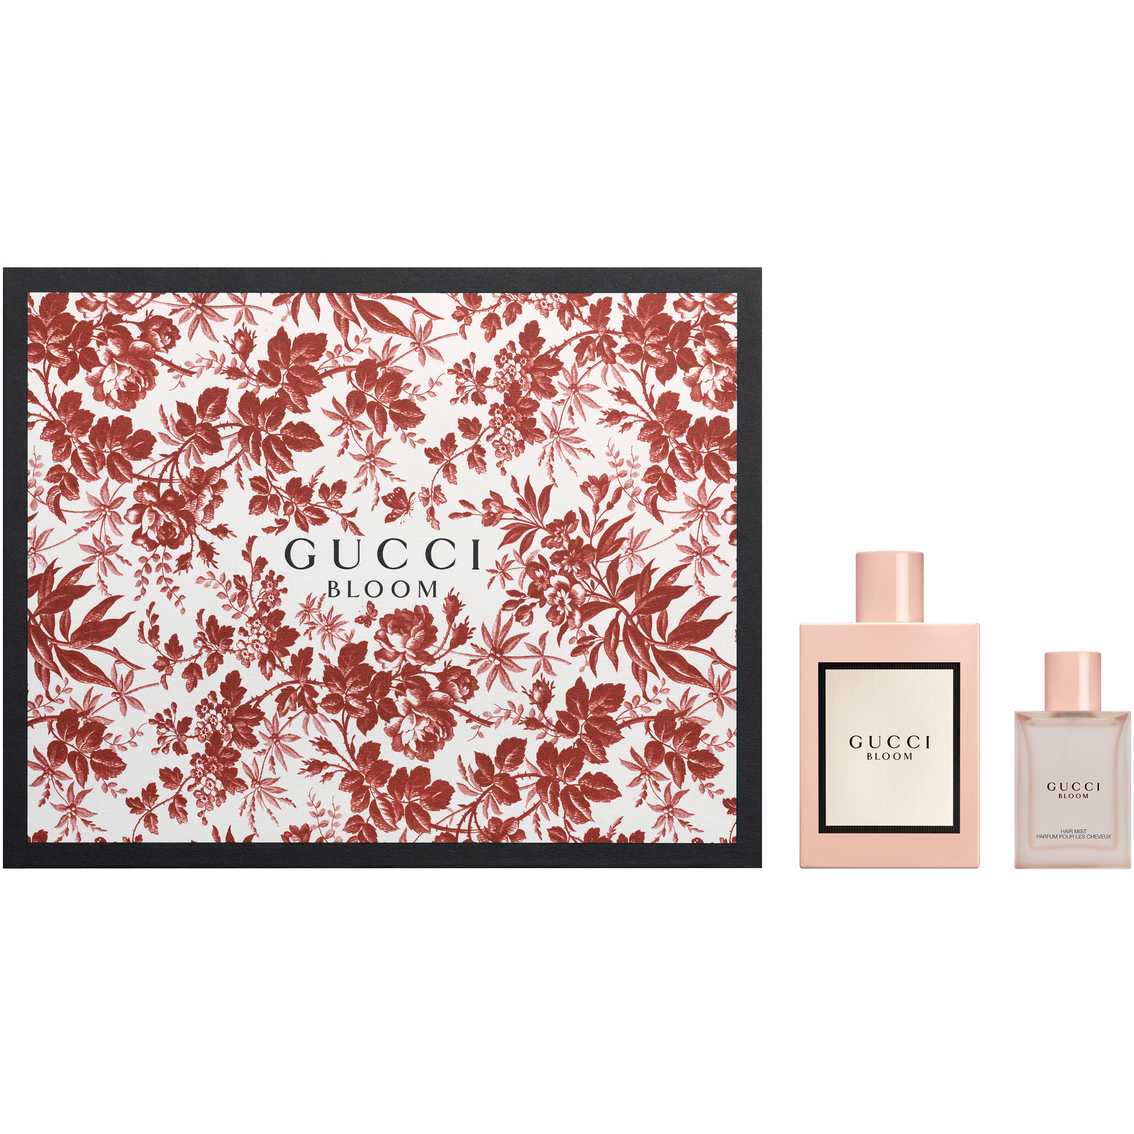 gucci bloom set price